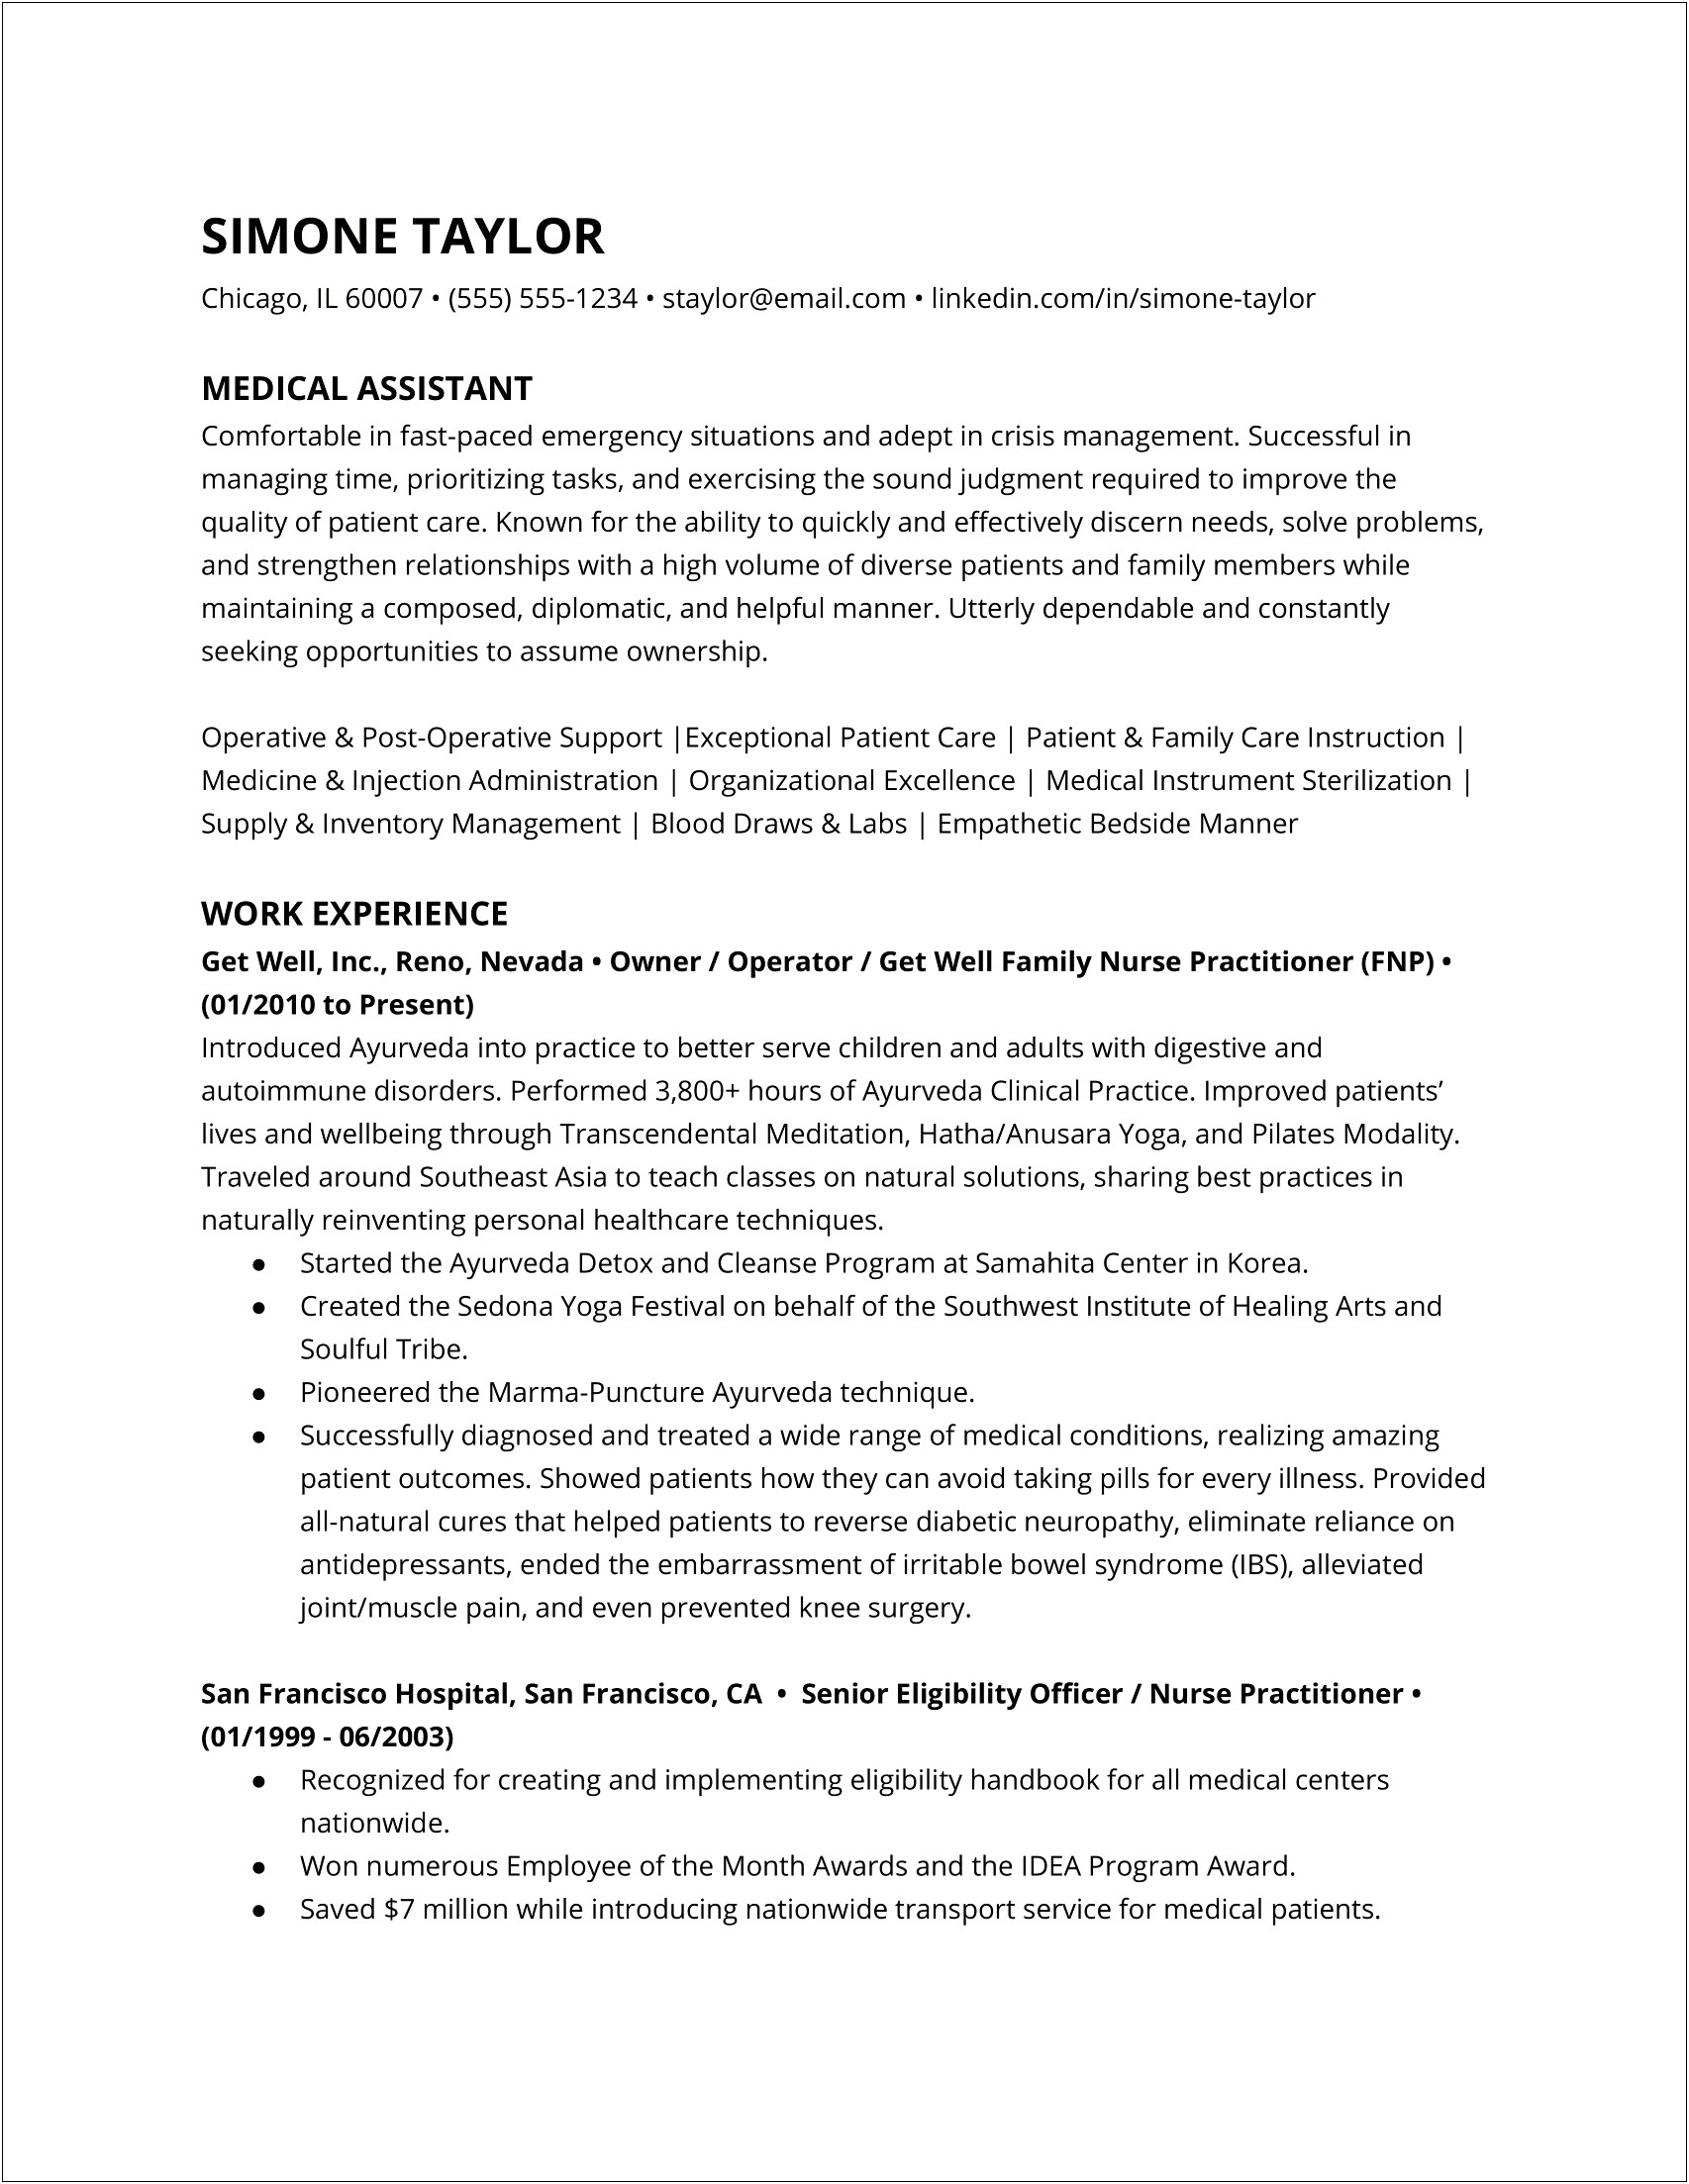 Best Resume Skills For Mental Health Worker